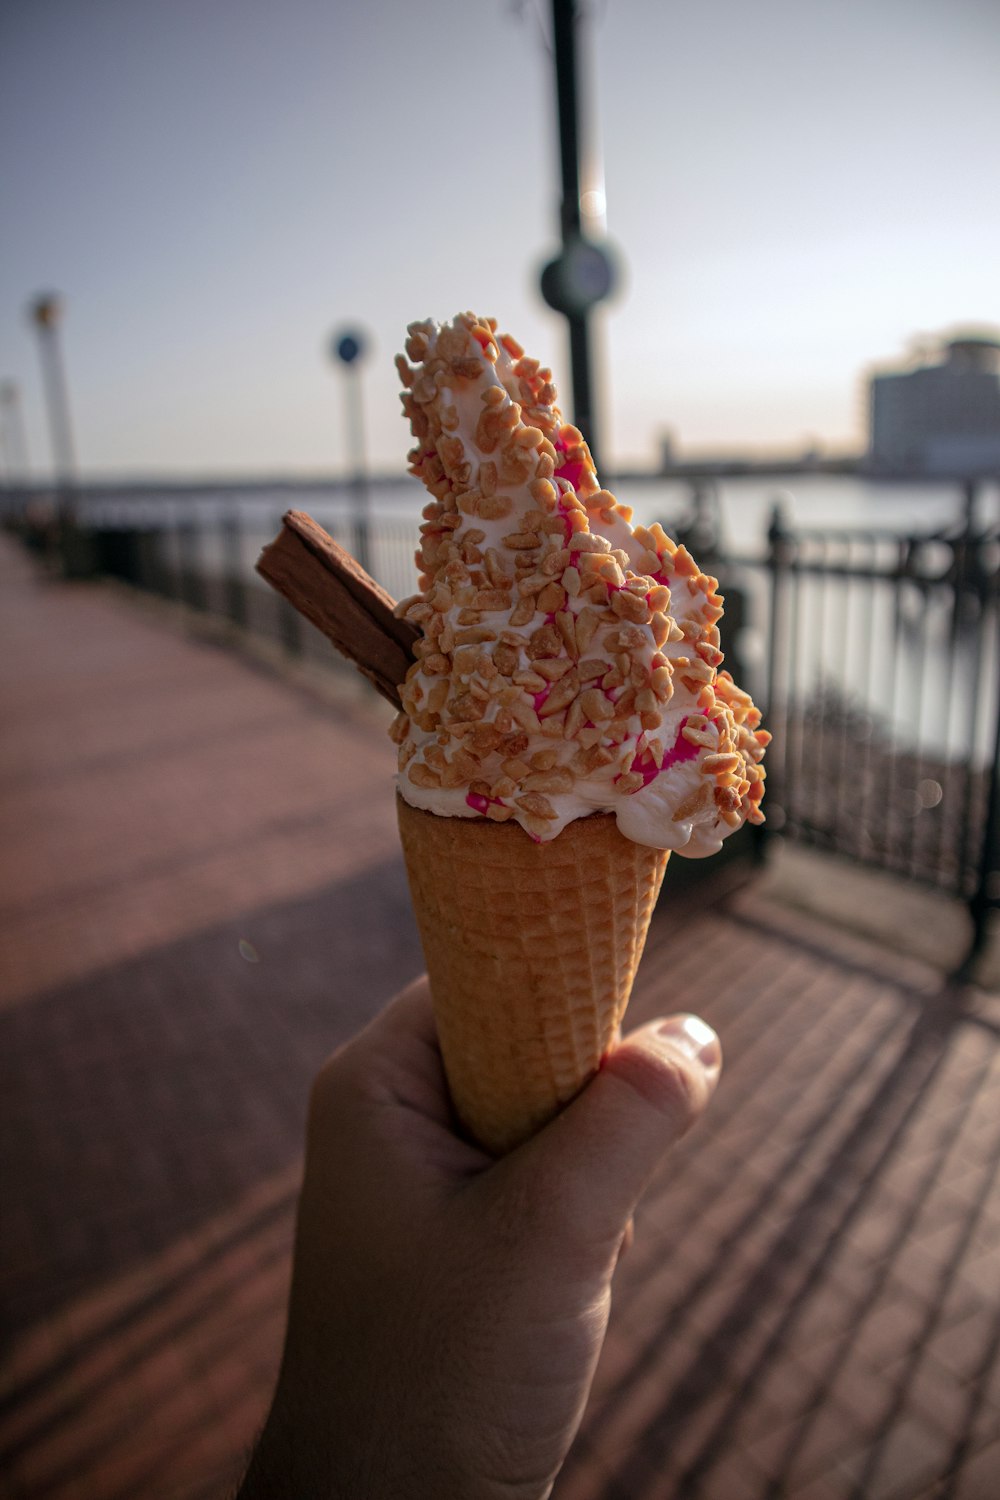 person holding ice cream cone with white ice cream